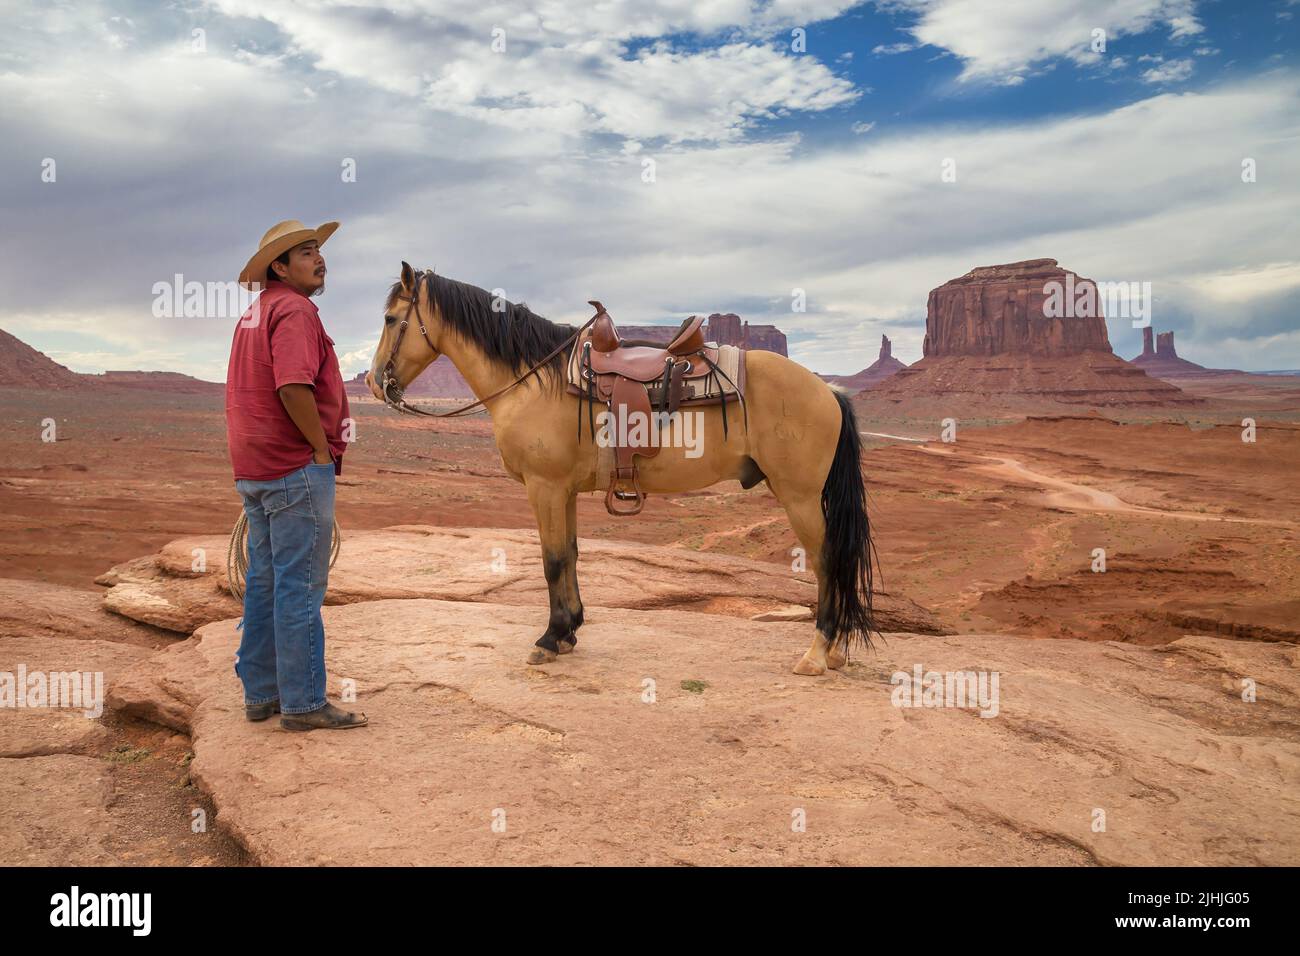 Oljato-Monument Valley, Arizona - September 4, 2019: Navajo Native American man with a horse at John Ford Point in Monument Valley, Arizona, United St Stock Photo